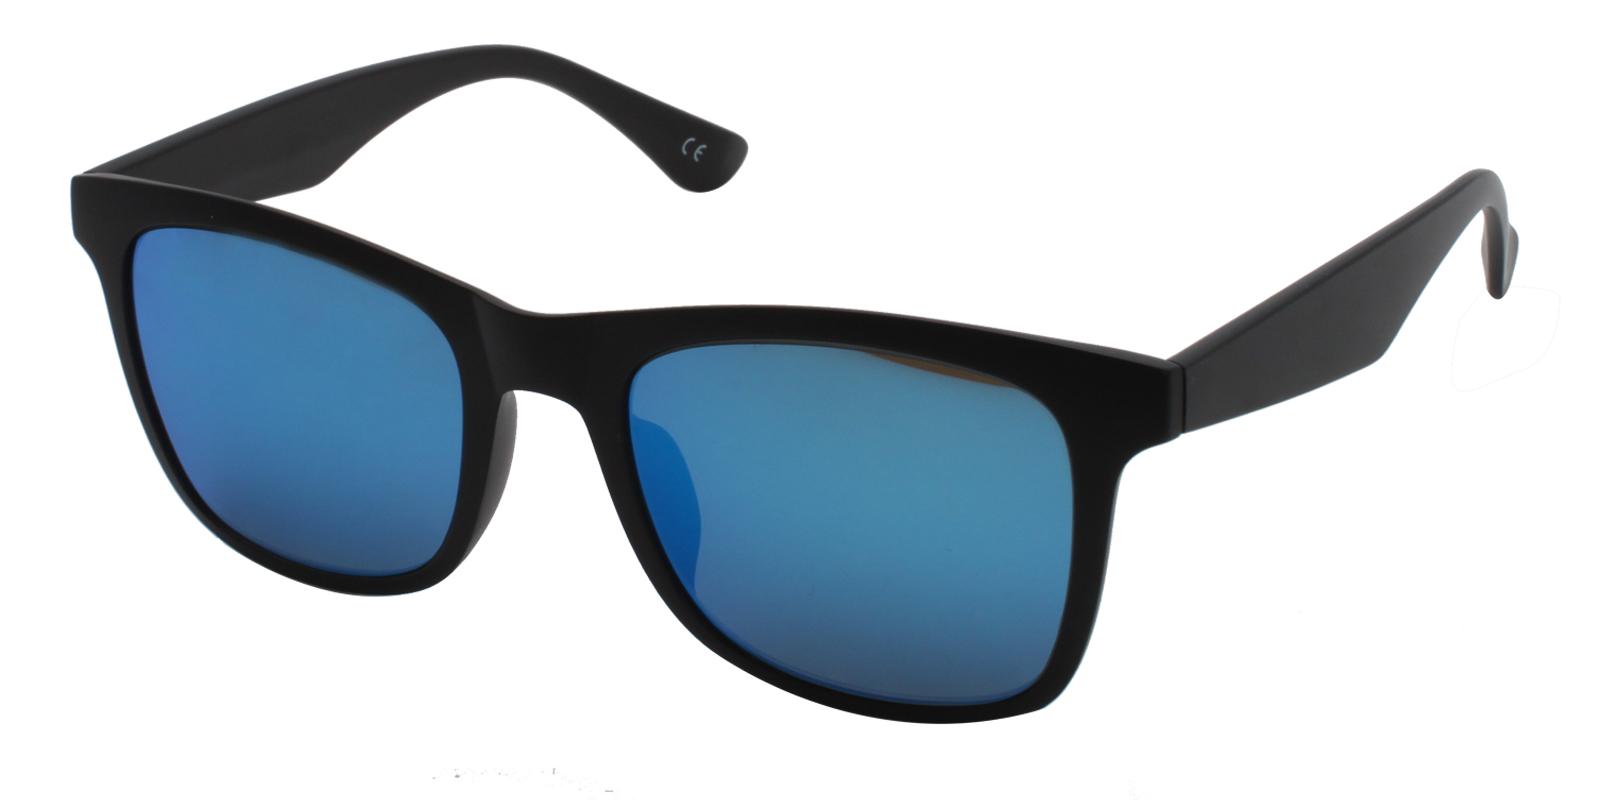 Oman Black TR Sunglasses , UniversalBridgeFit Frames from ABBE Glasses